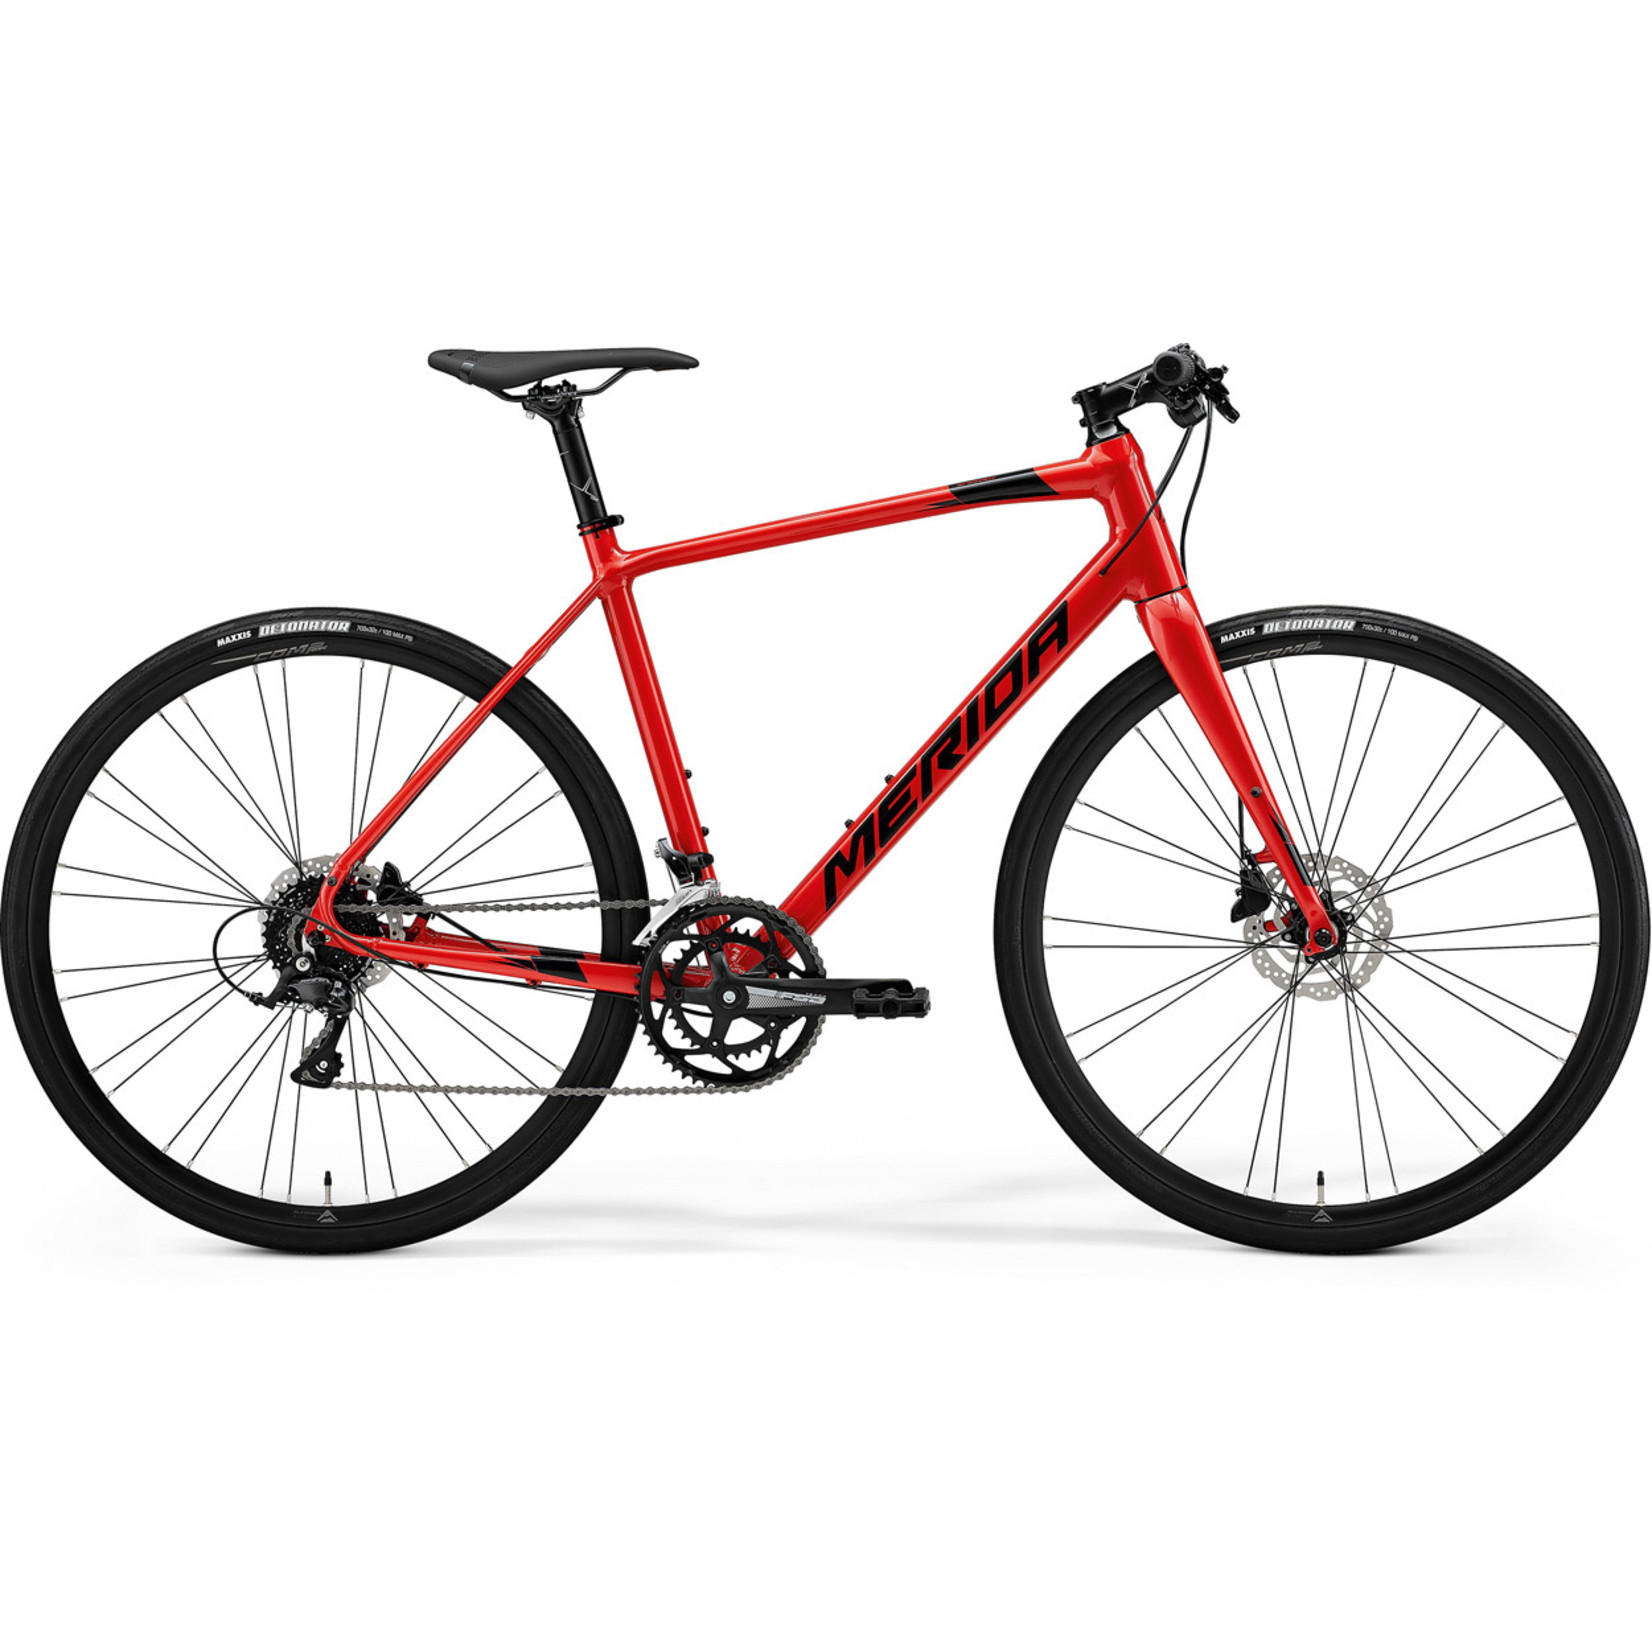 Merida Merida Speeder 200 Flat Bar Road Bike - Golden Red(Black) - Medium/Large